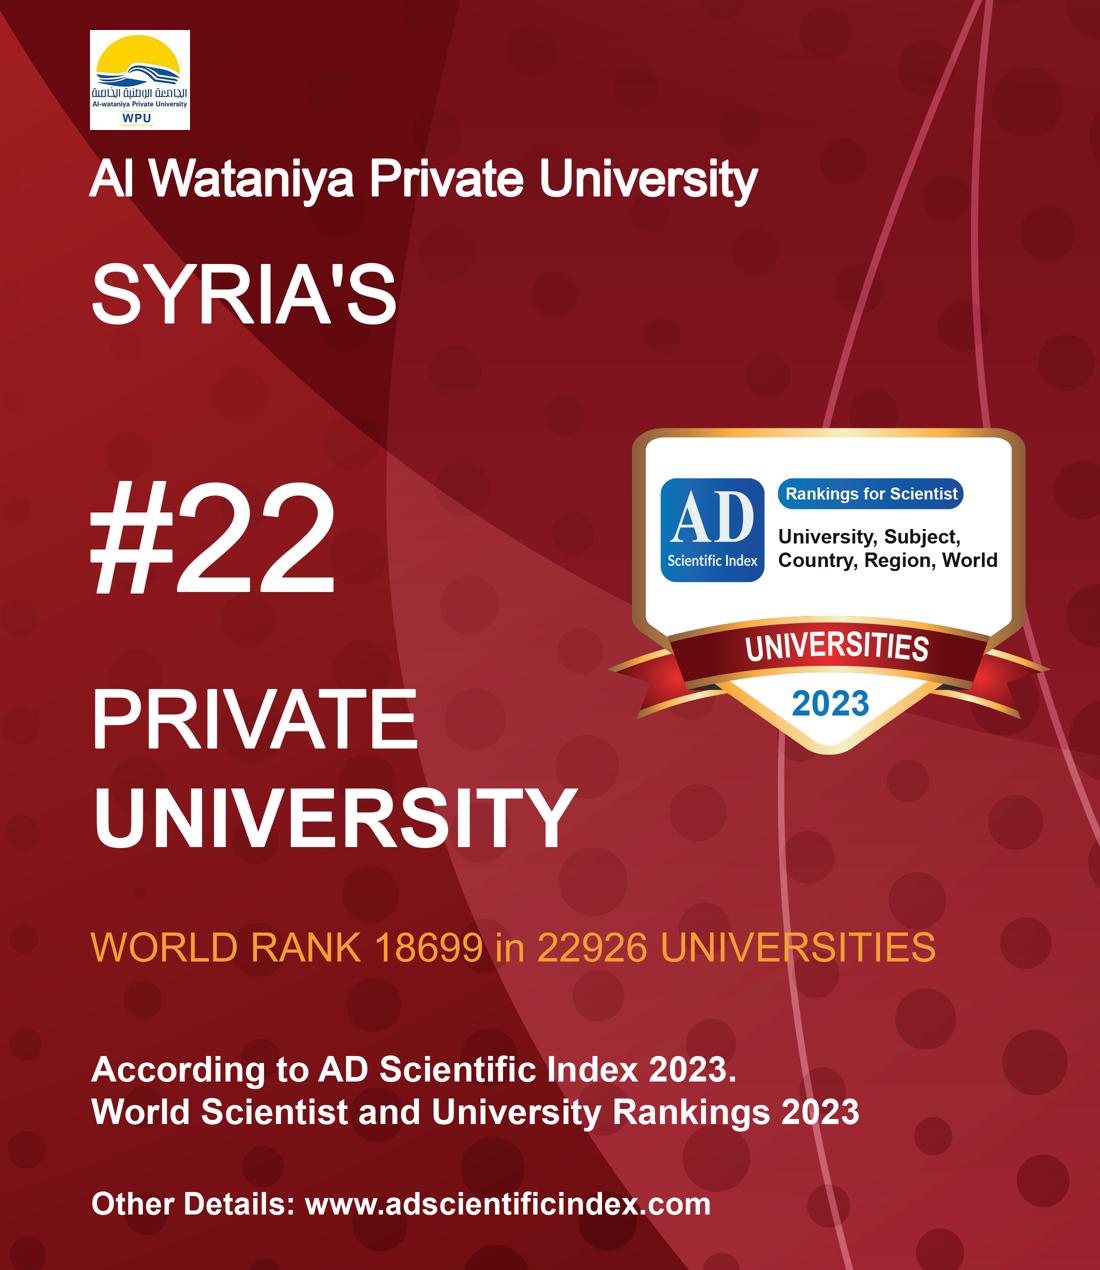 Al Wataniya Private University